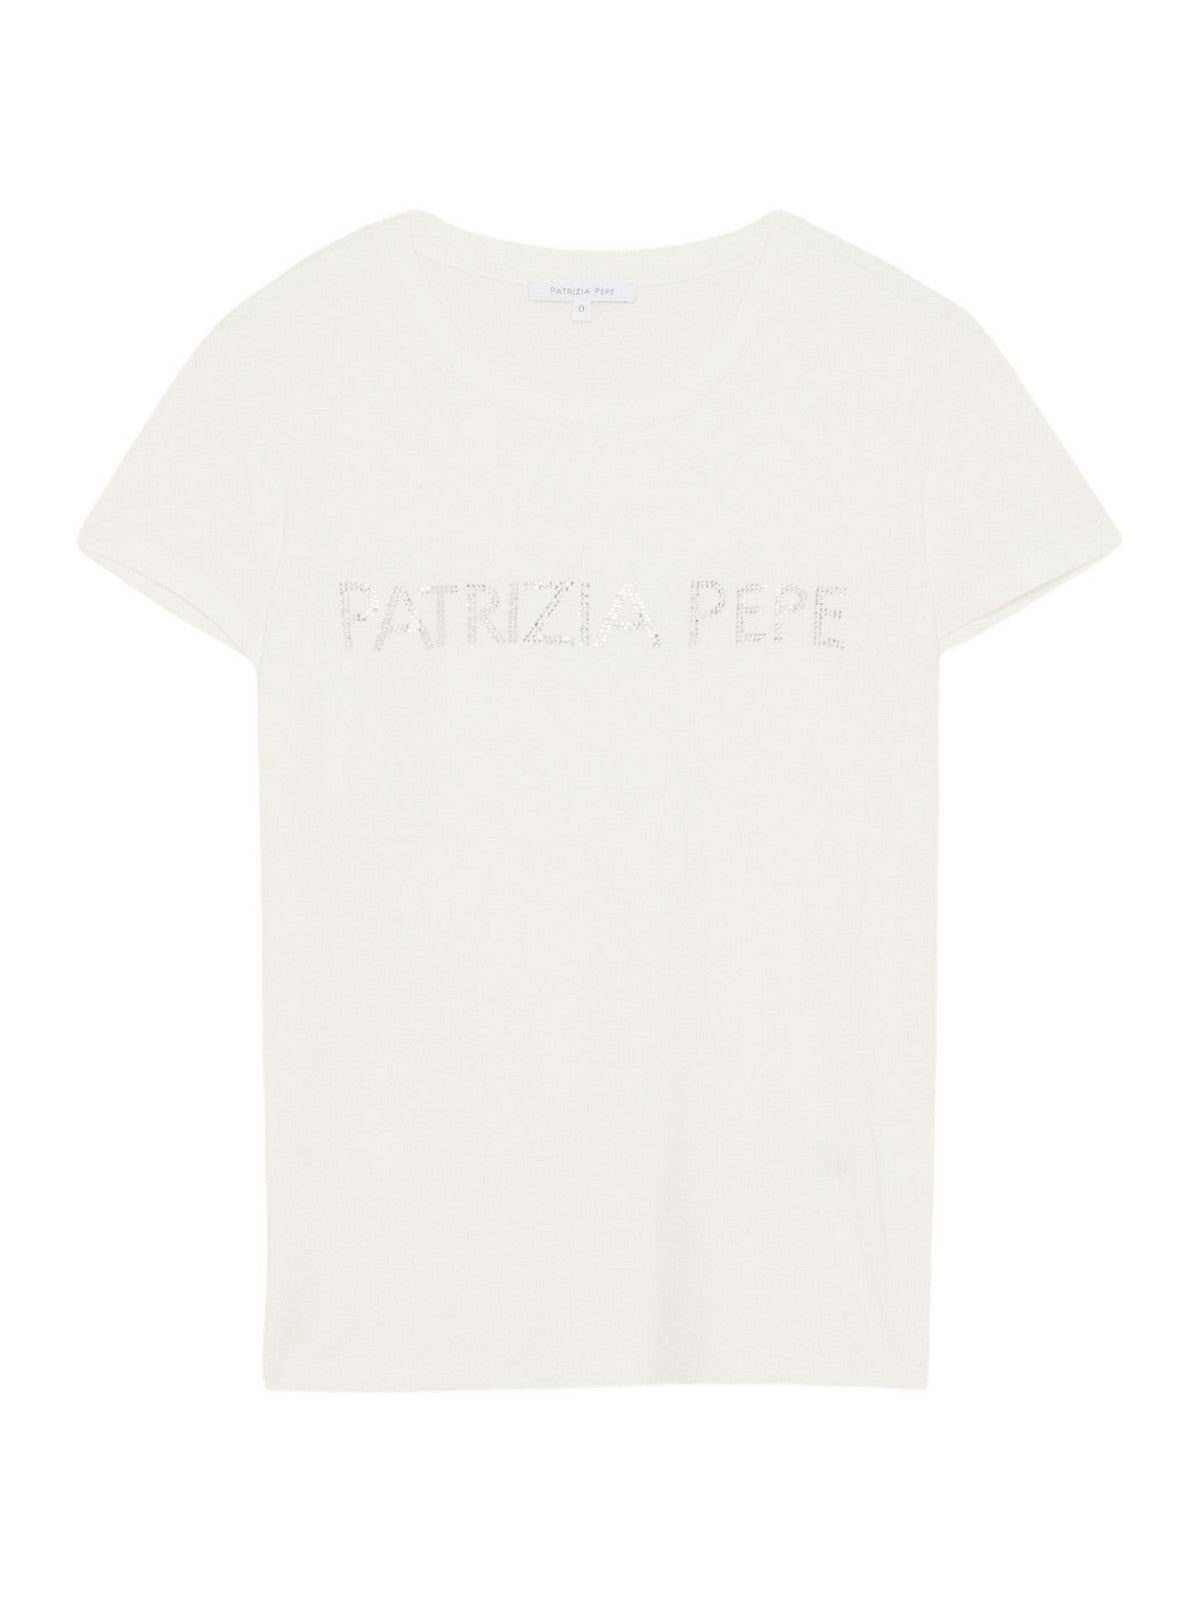 PATRIZIA PEPE T-Shirt et Polo Femme CM1419 J013 W146 Blanc